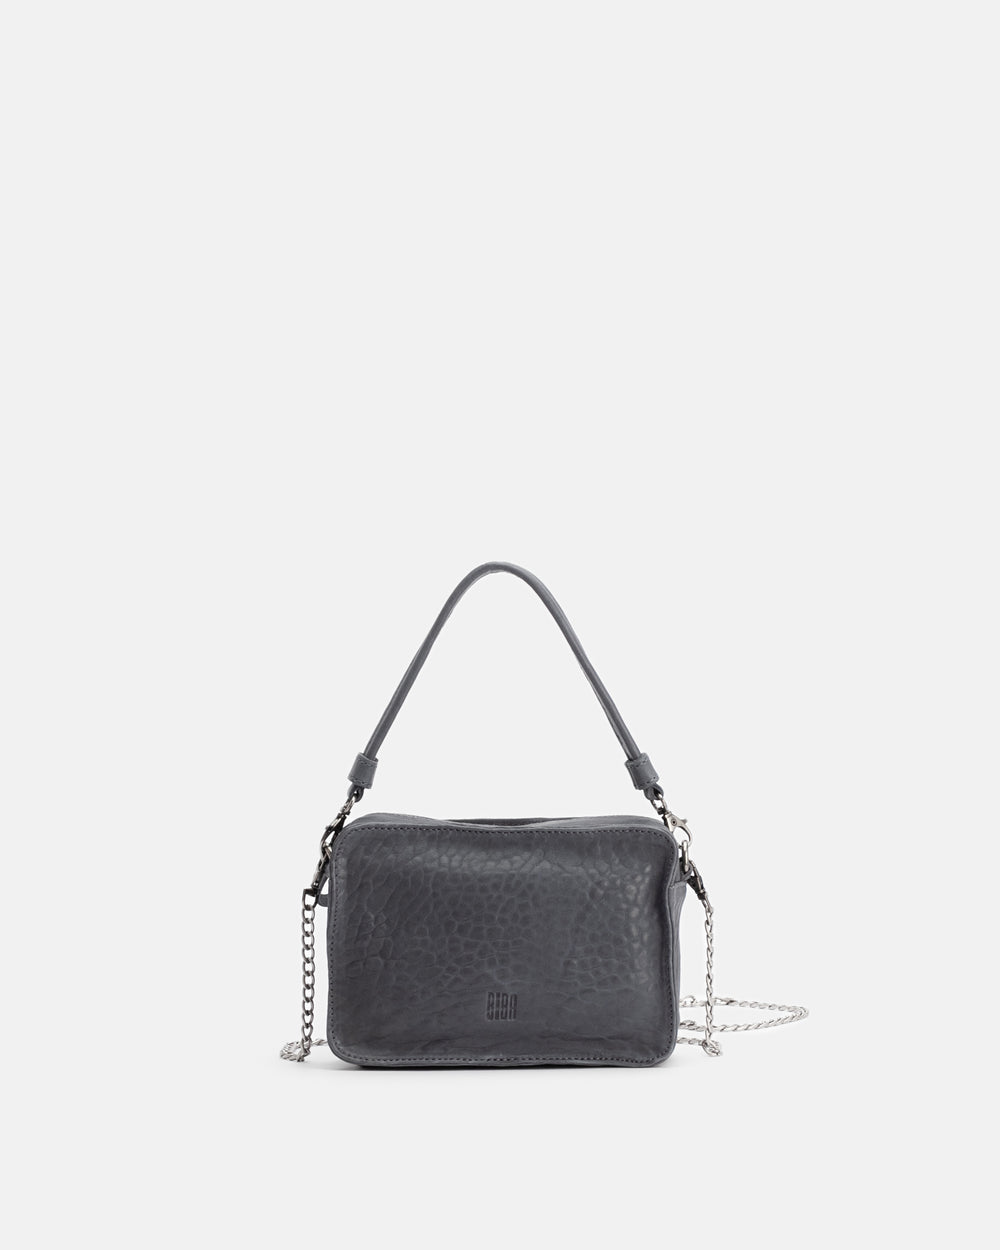 Biba Logan Leather Bag- BLACK Small Handbags Biba   